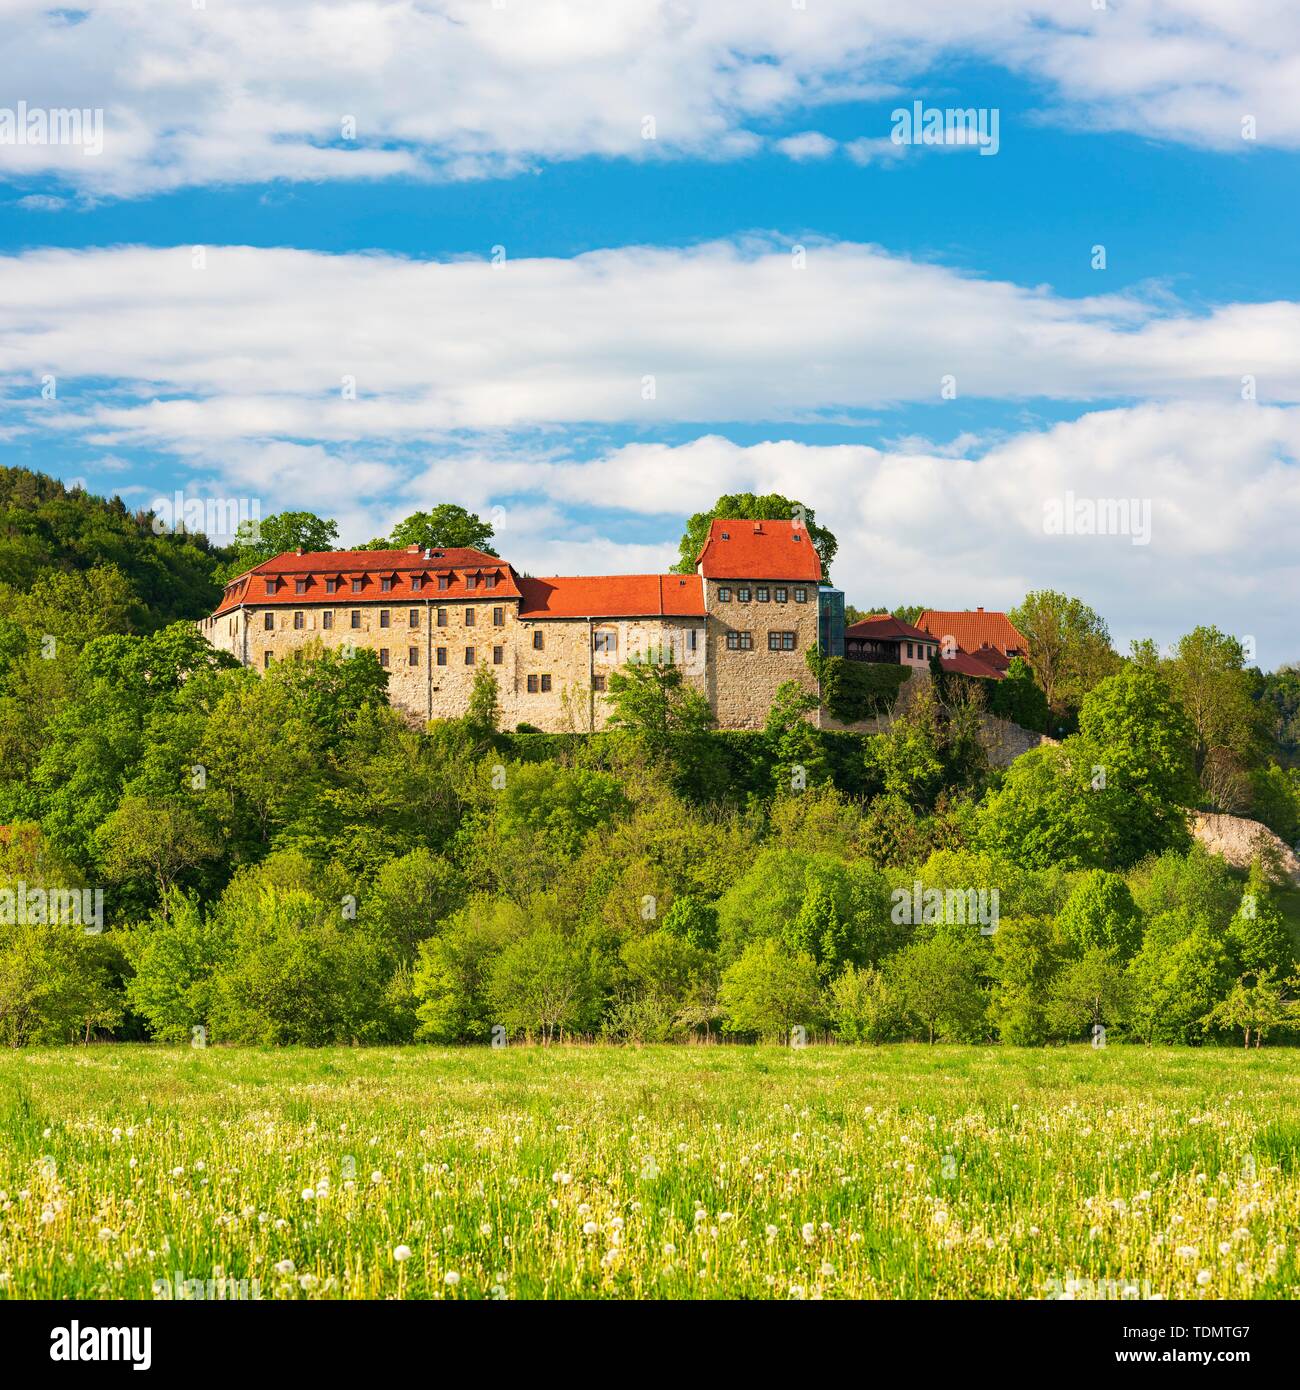 Creuzburg Castle in the Werra valley, Creuzburg, Thuringia, Germany Stock Photo